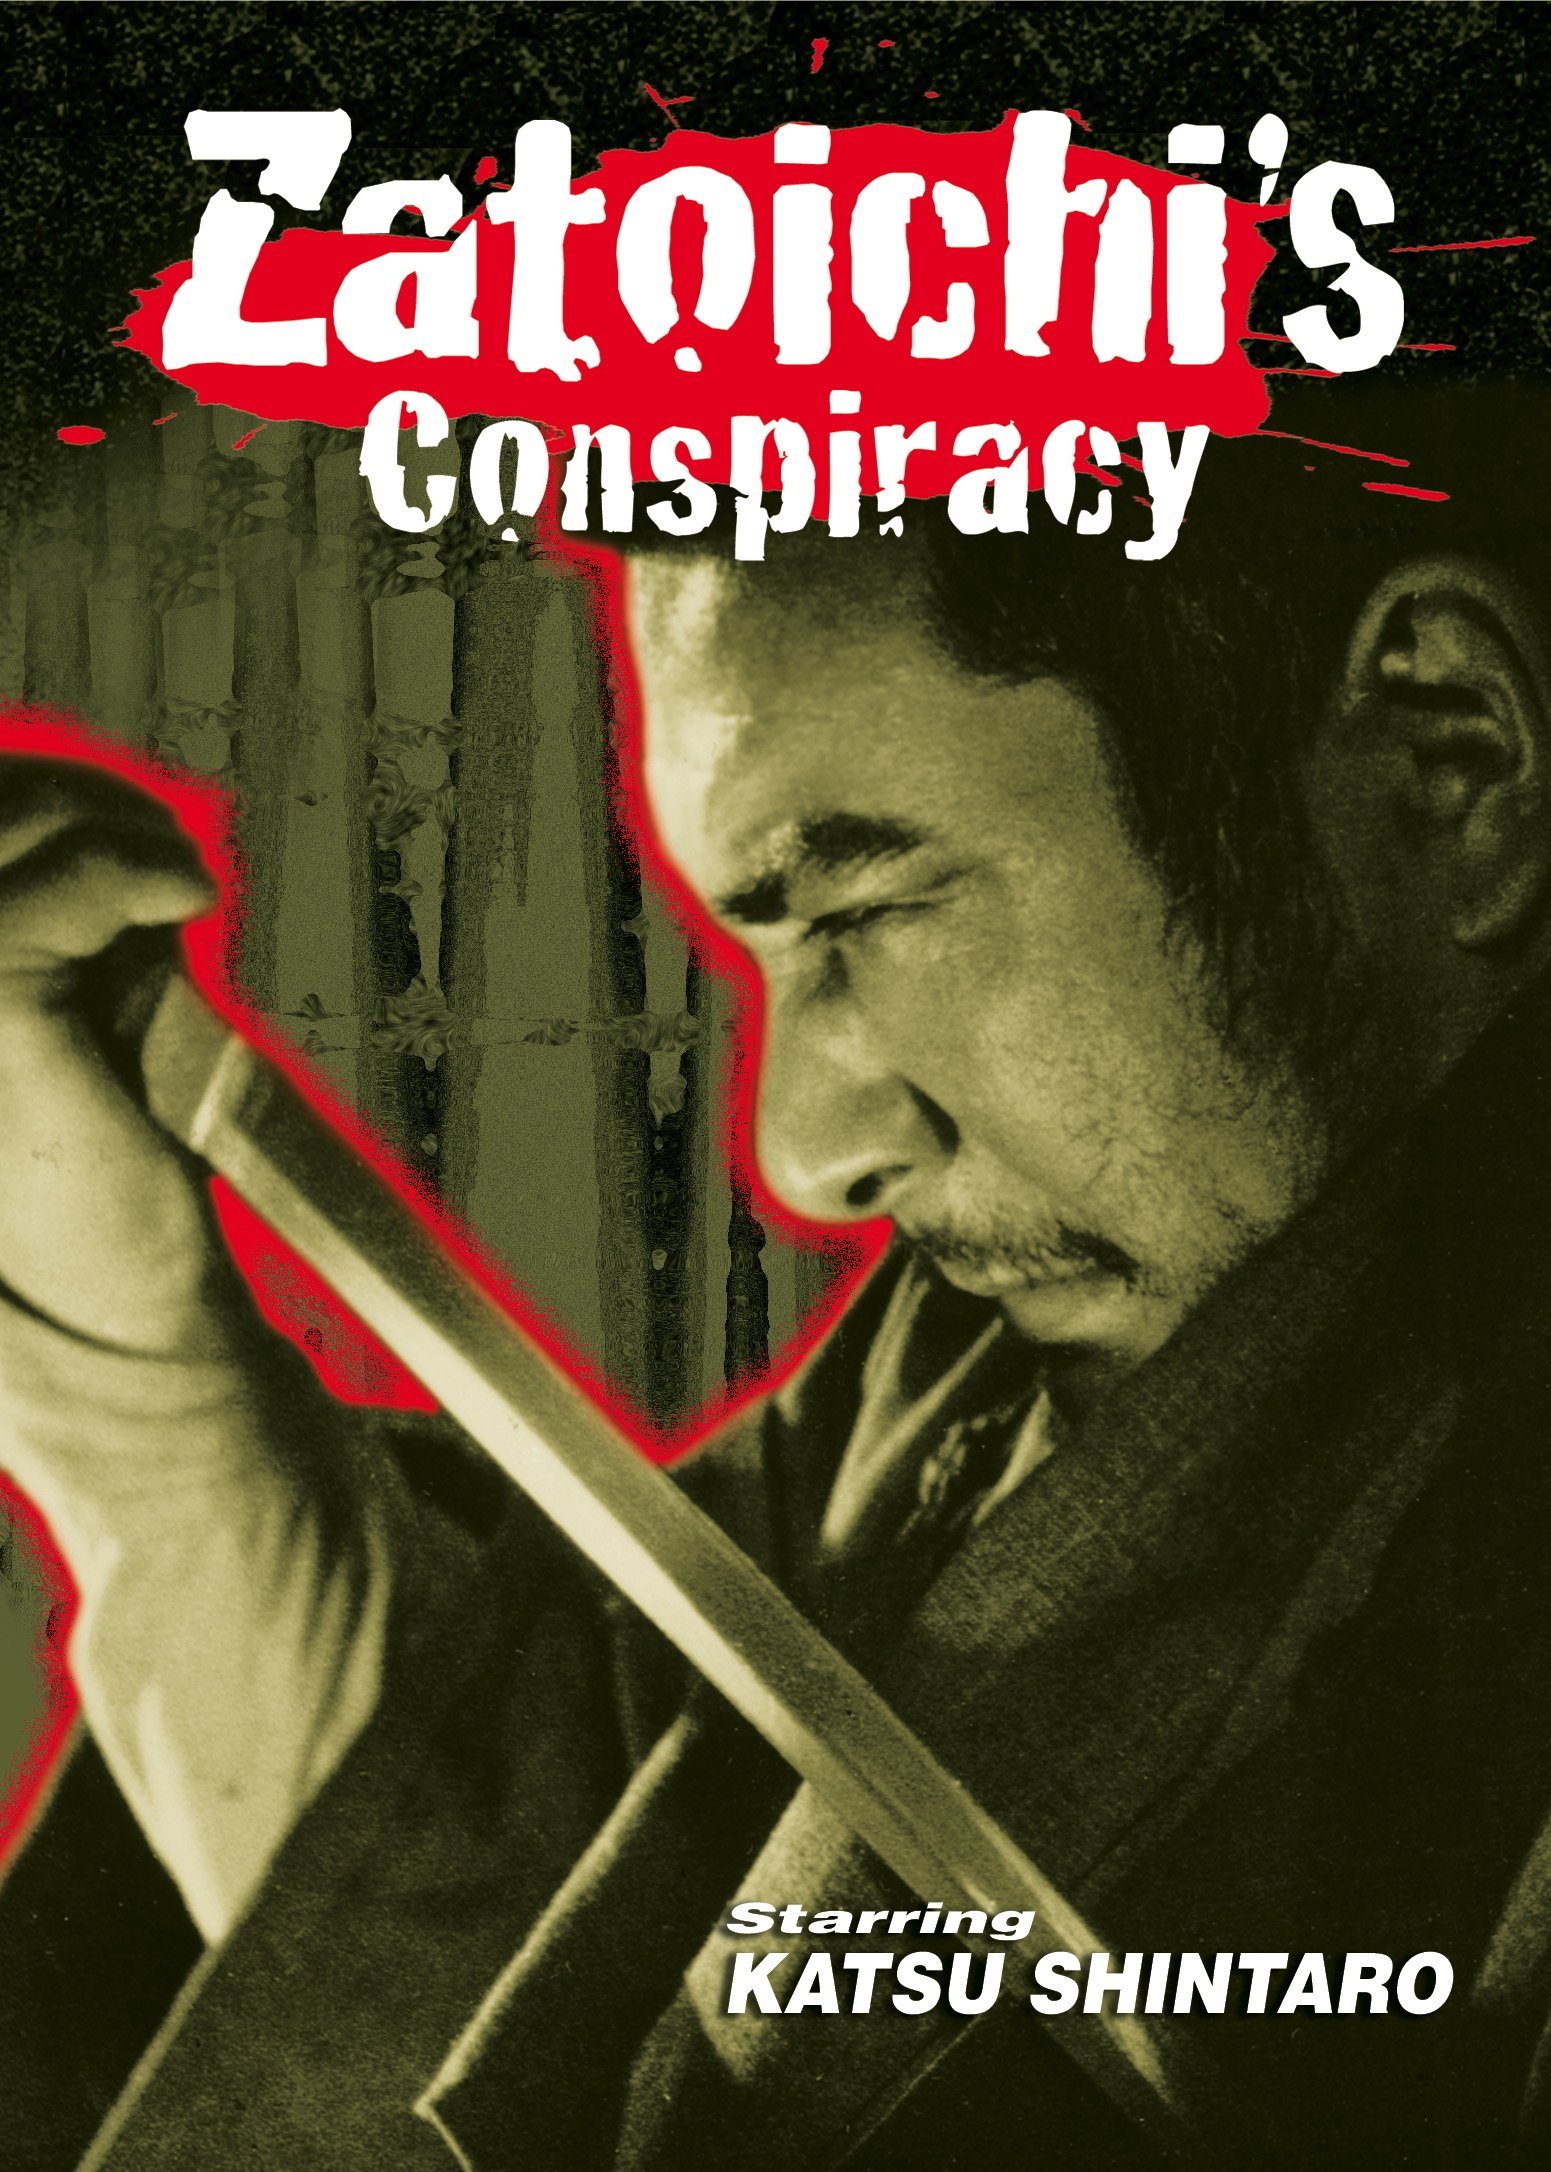 Poster of the movie Zatoichi's Conspiracy